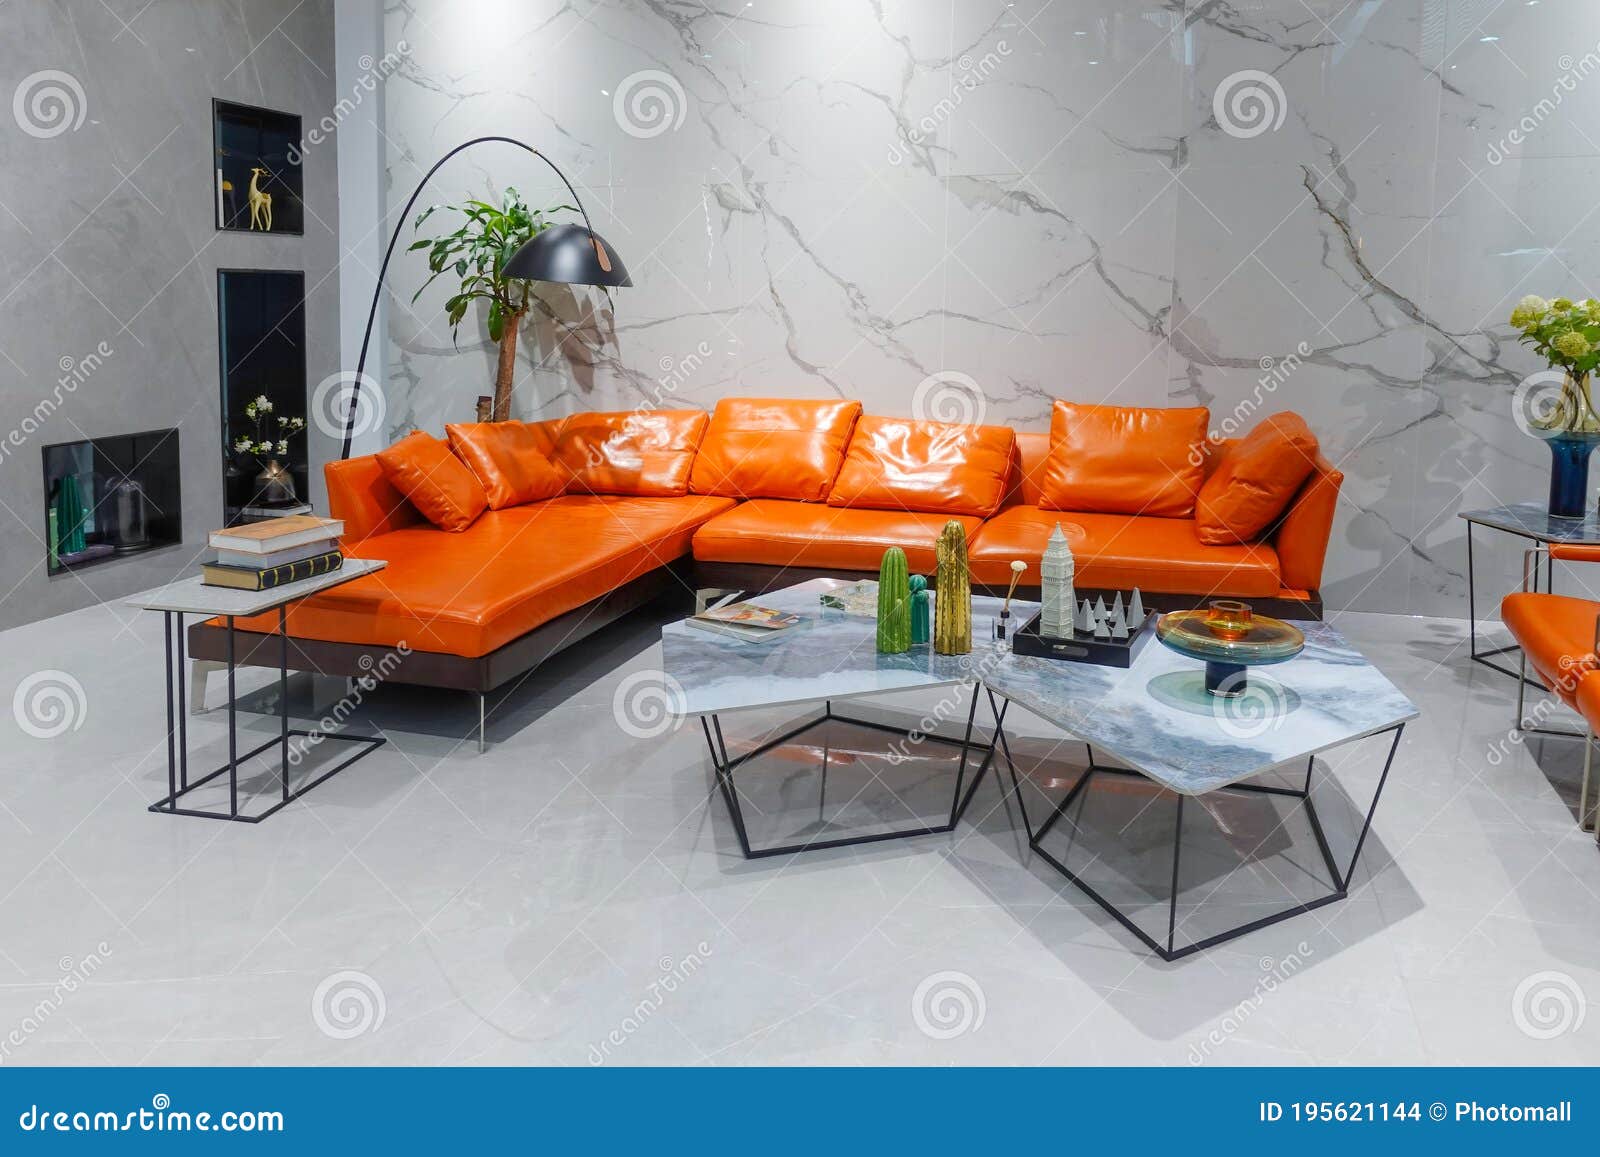 Modern Living Room Furniture In House Orange Leather Sofa Stock Photo Image Of Decor